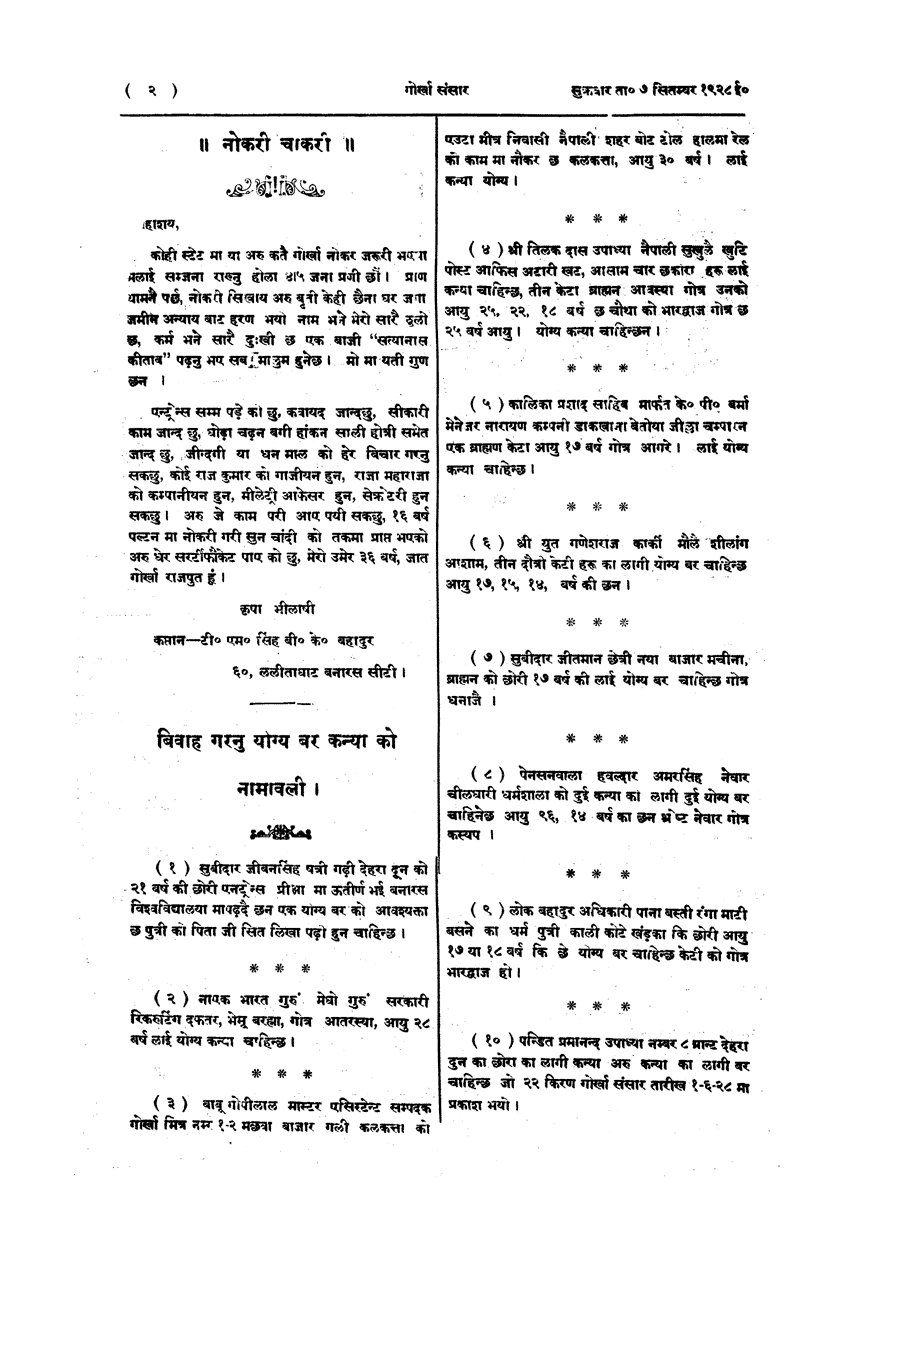 Gorkha Sansar, 7 Sept 1928, page 2